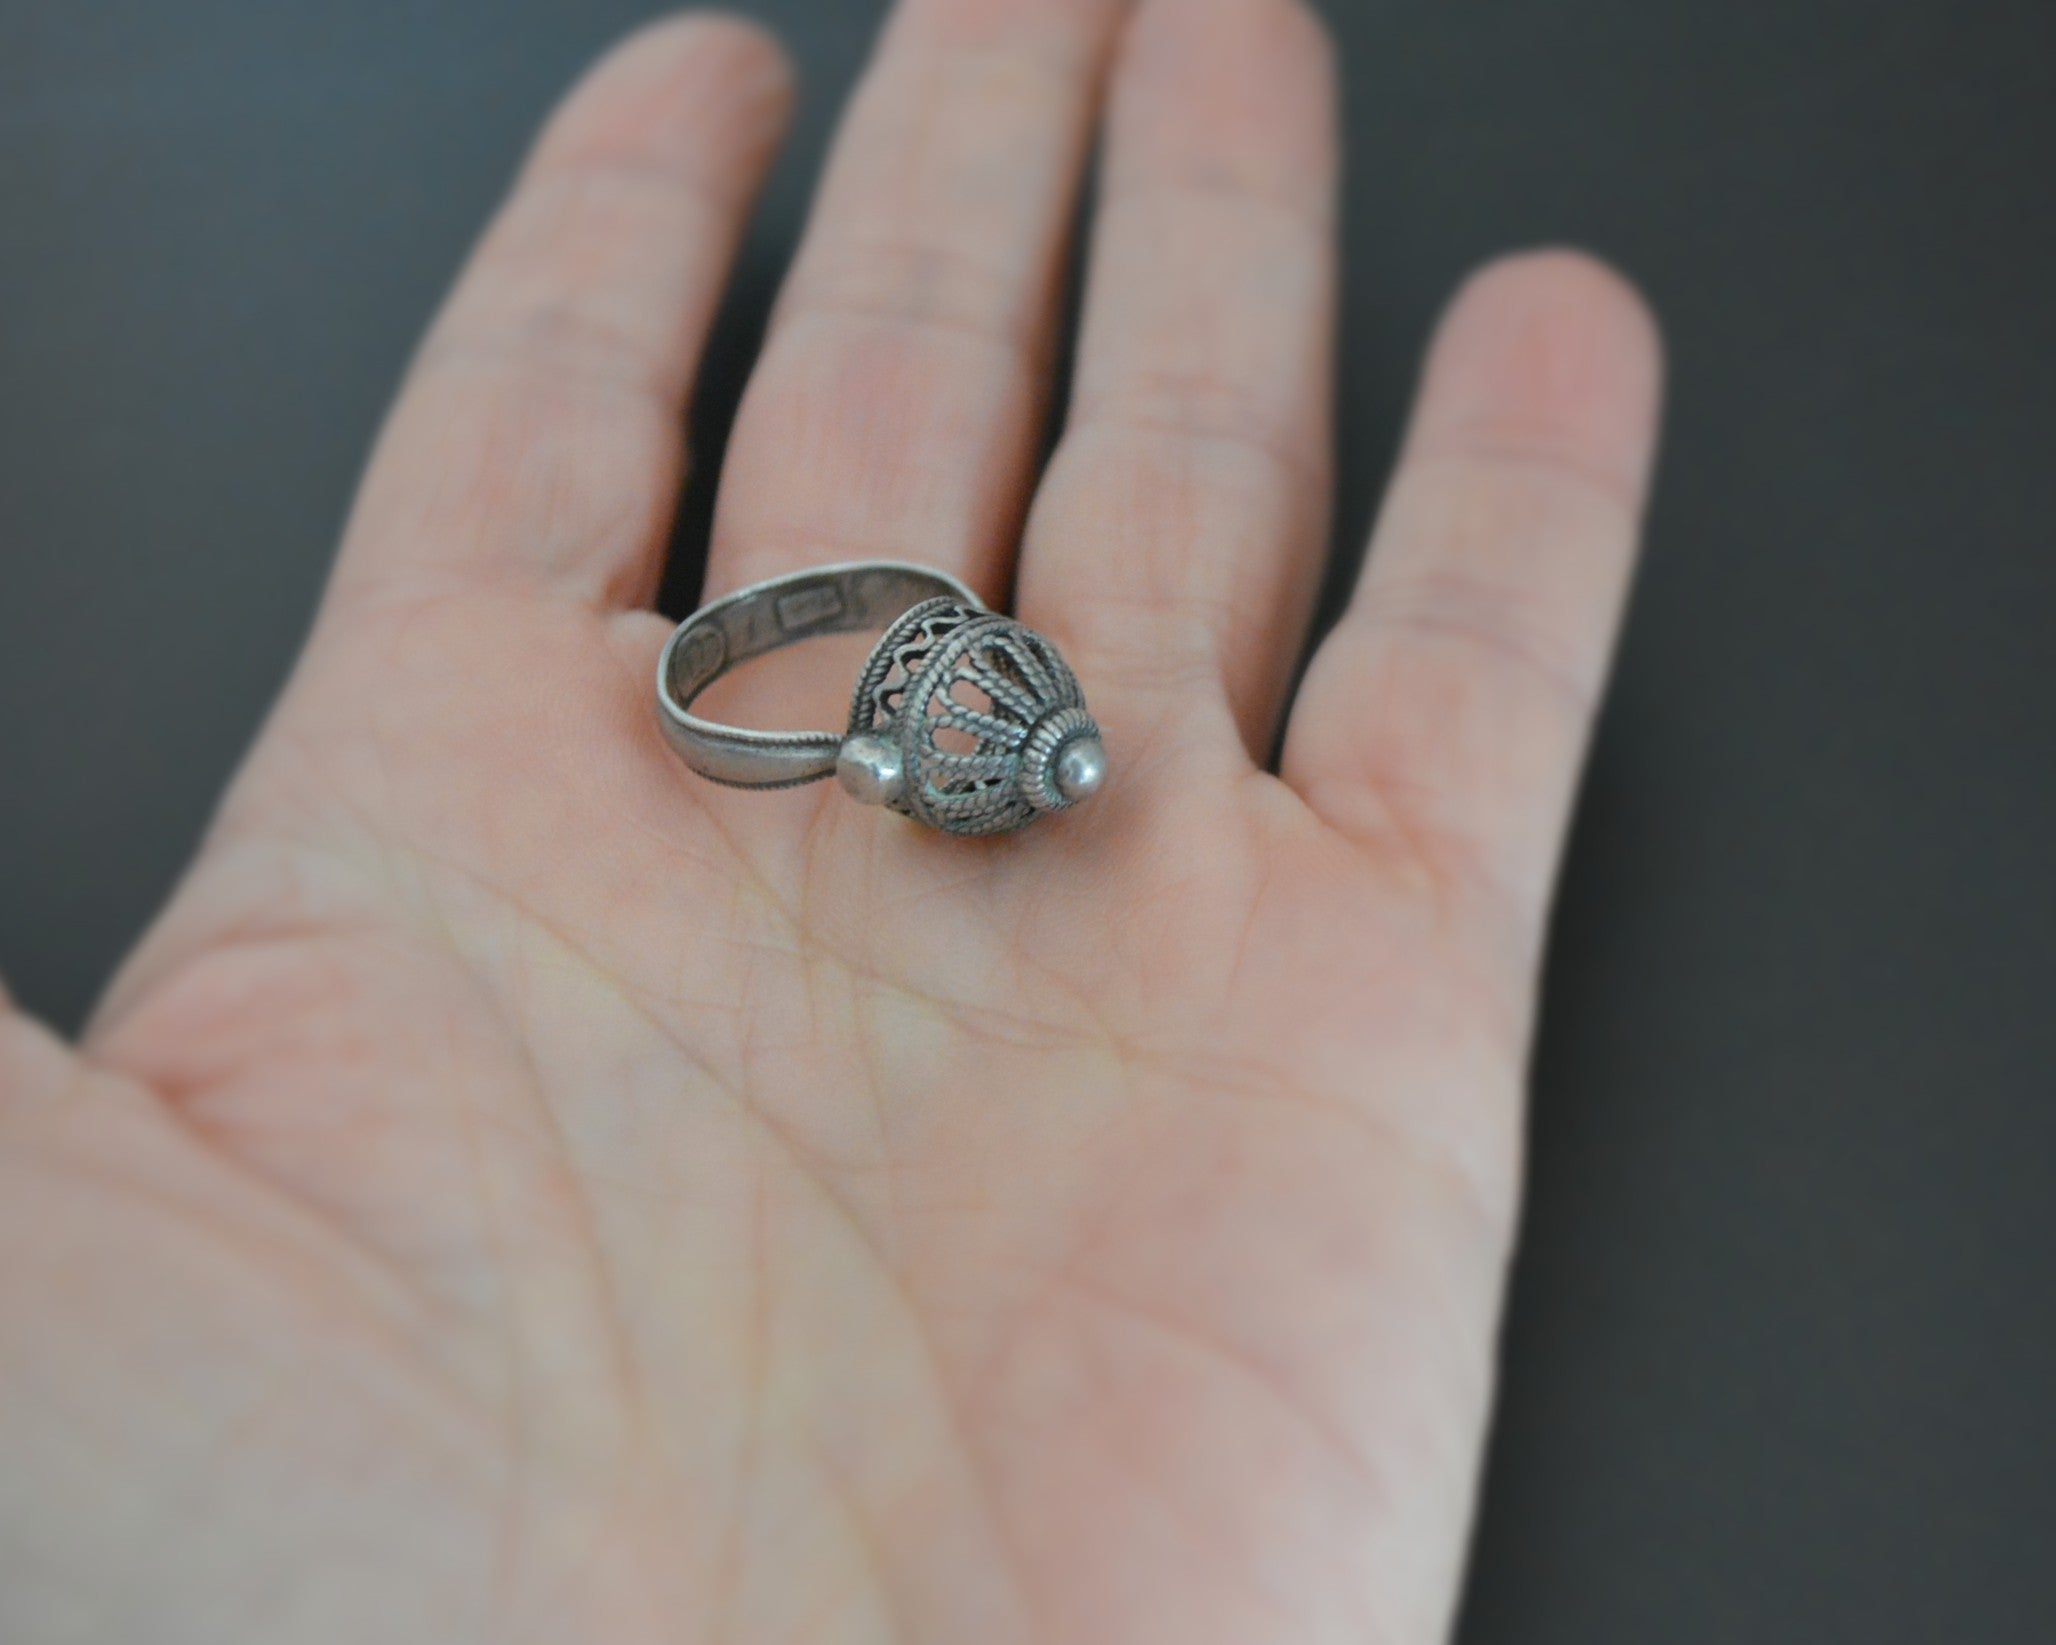 Yemeni Silver Filigree Ring - Size 5.75